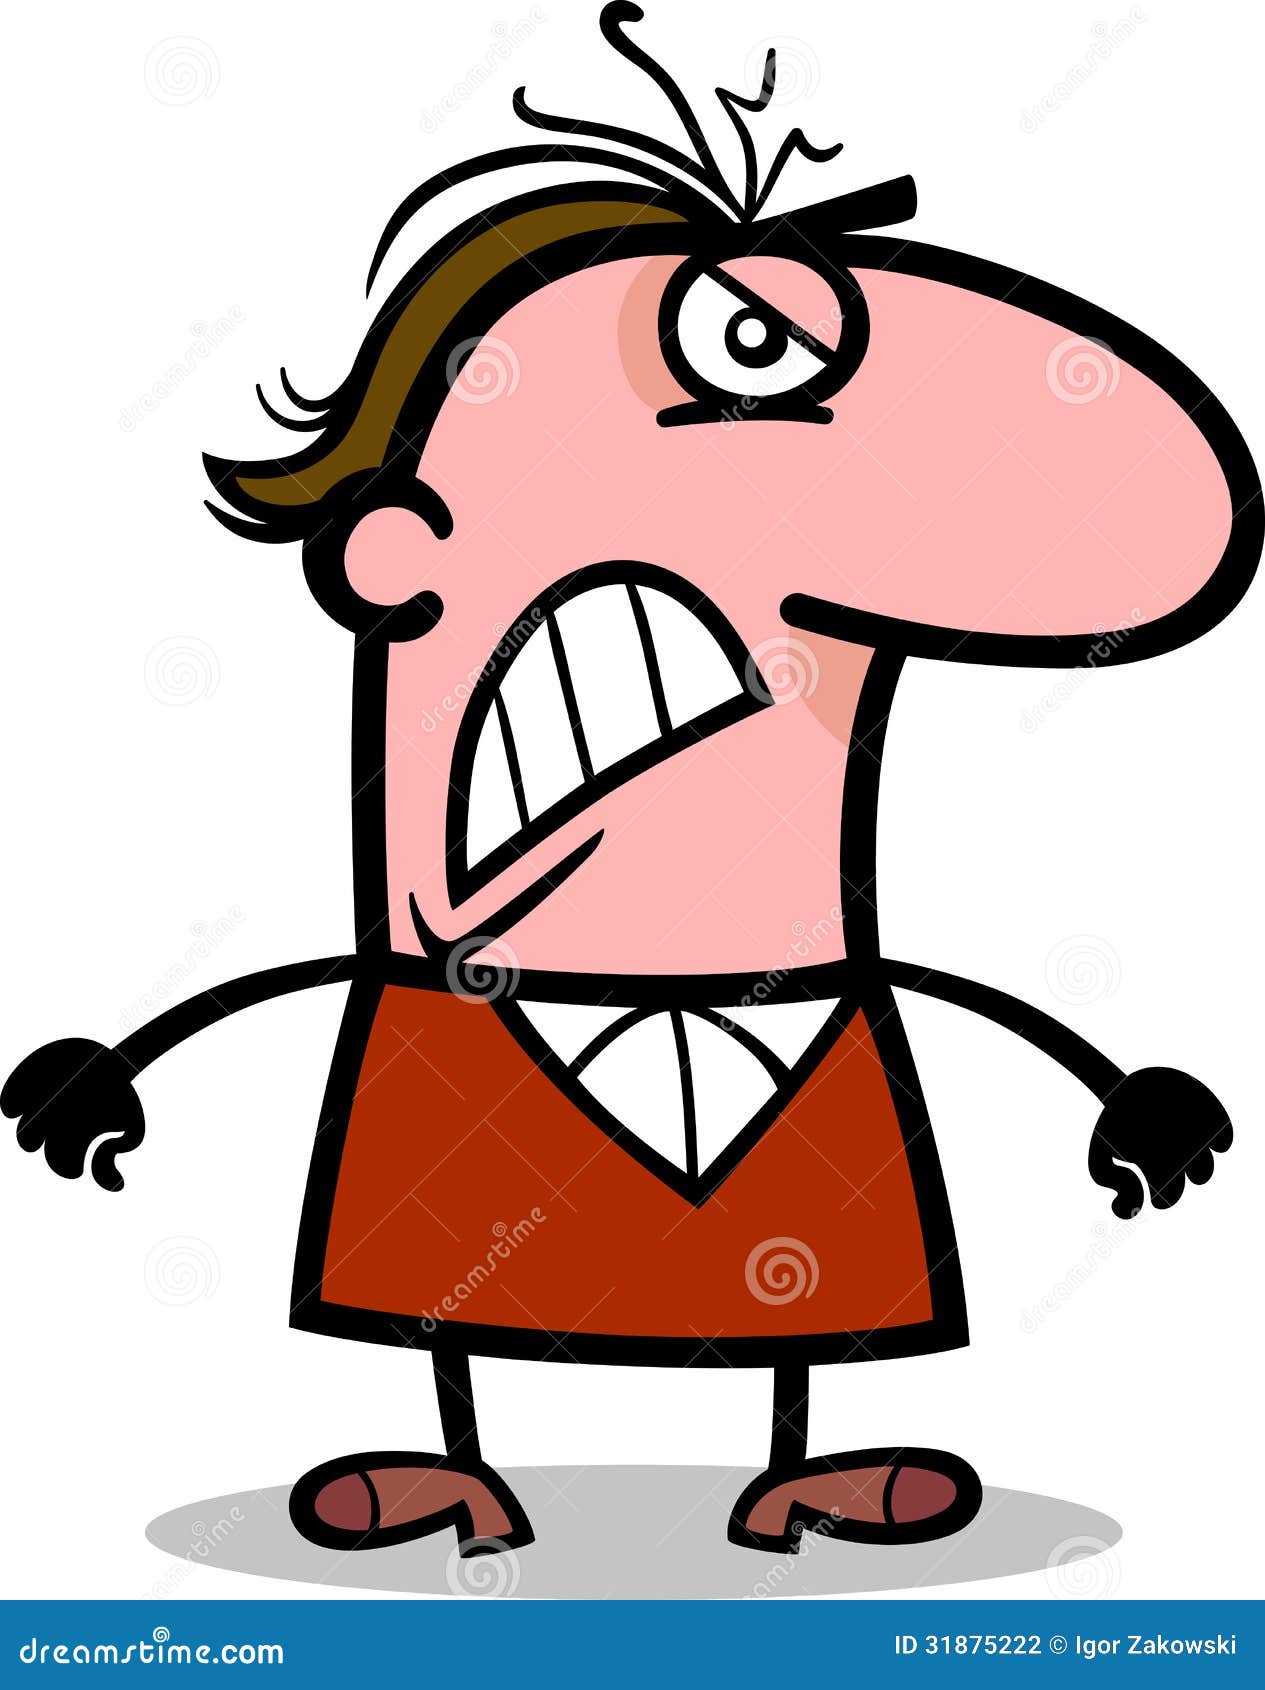 Angry Man Cartoon Illustration Stock Vector - Illustration of emoticon,  graphic: 31875222